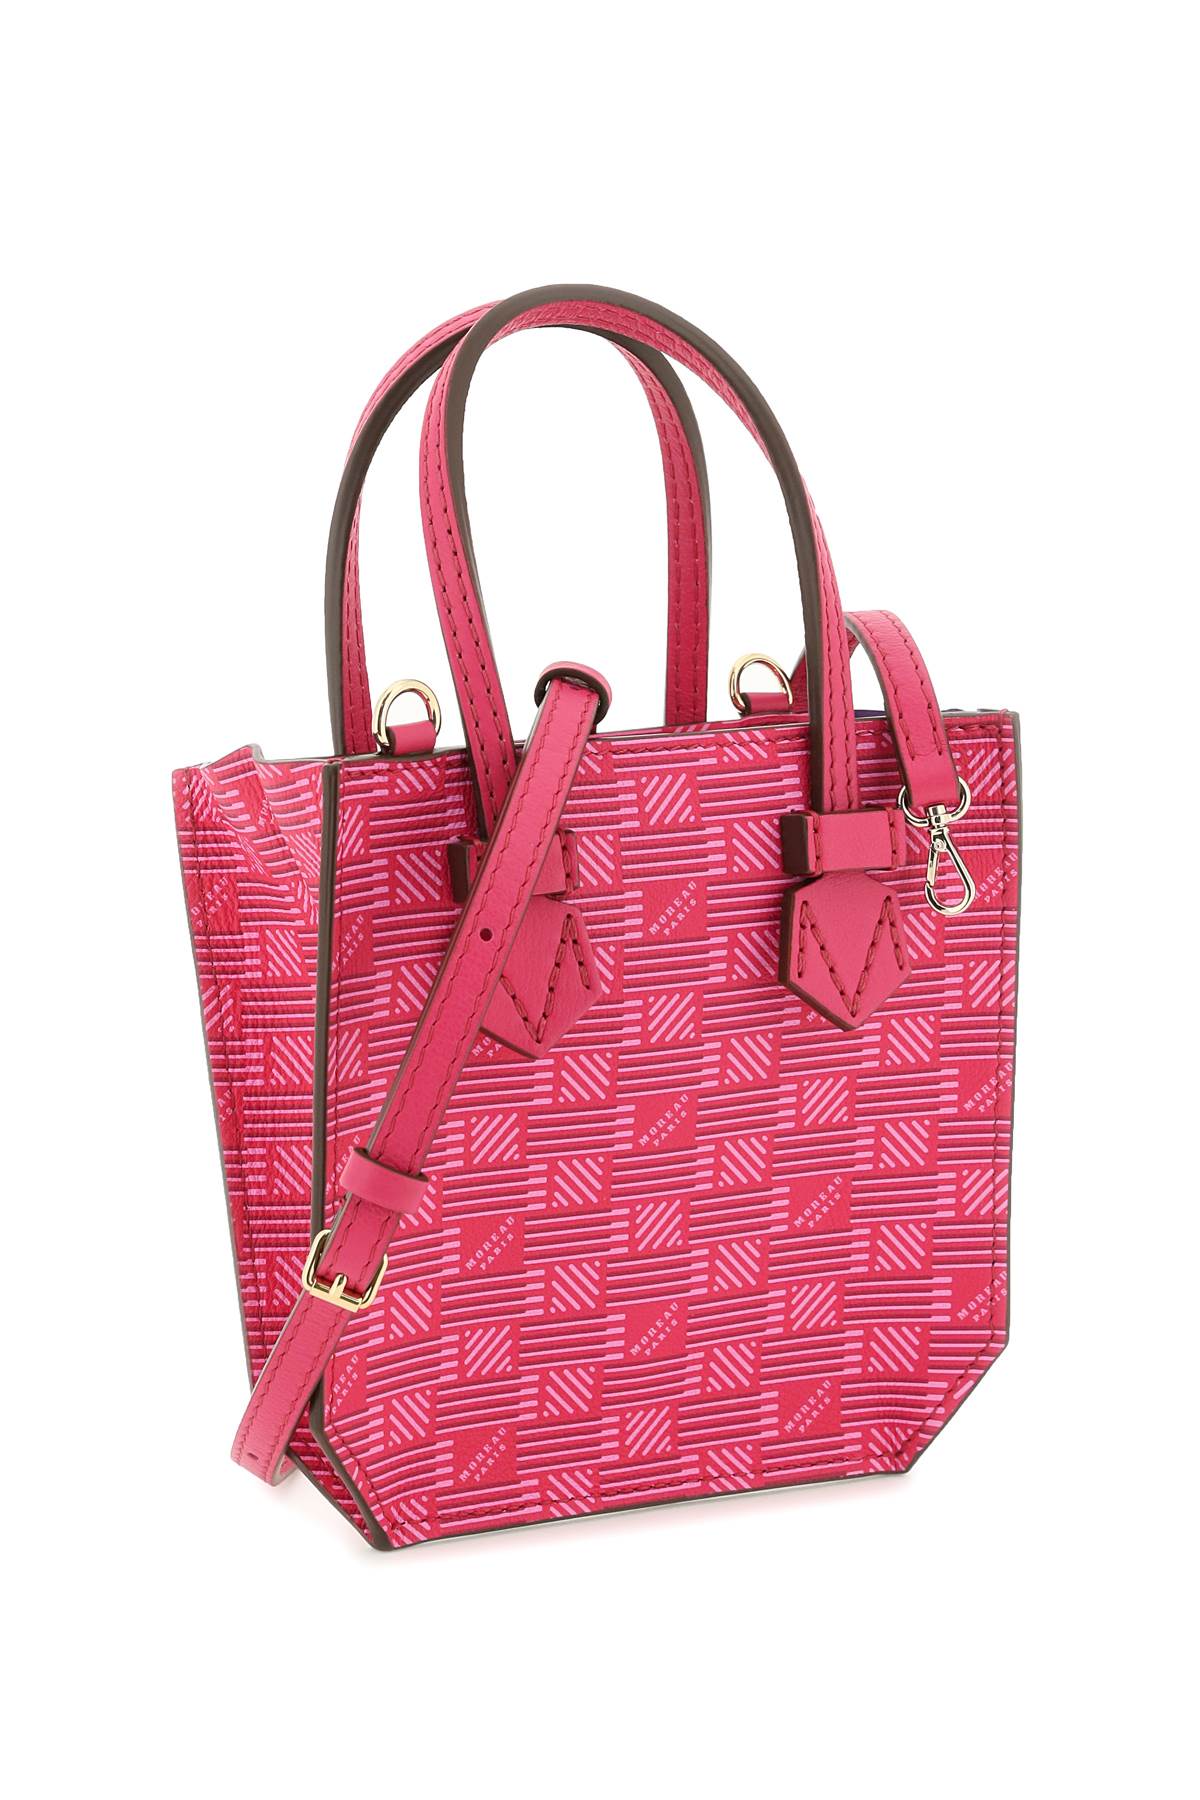 MOREAU PARIS Mini Bregançon Handbag in Pink Calfskin with Monogram and Gold Hardware